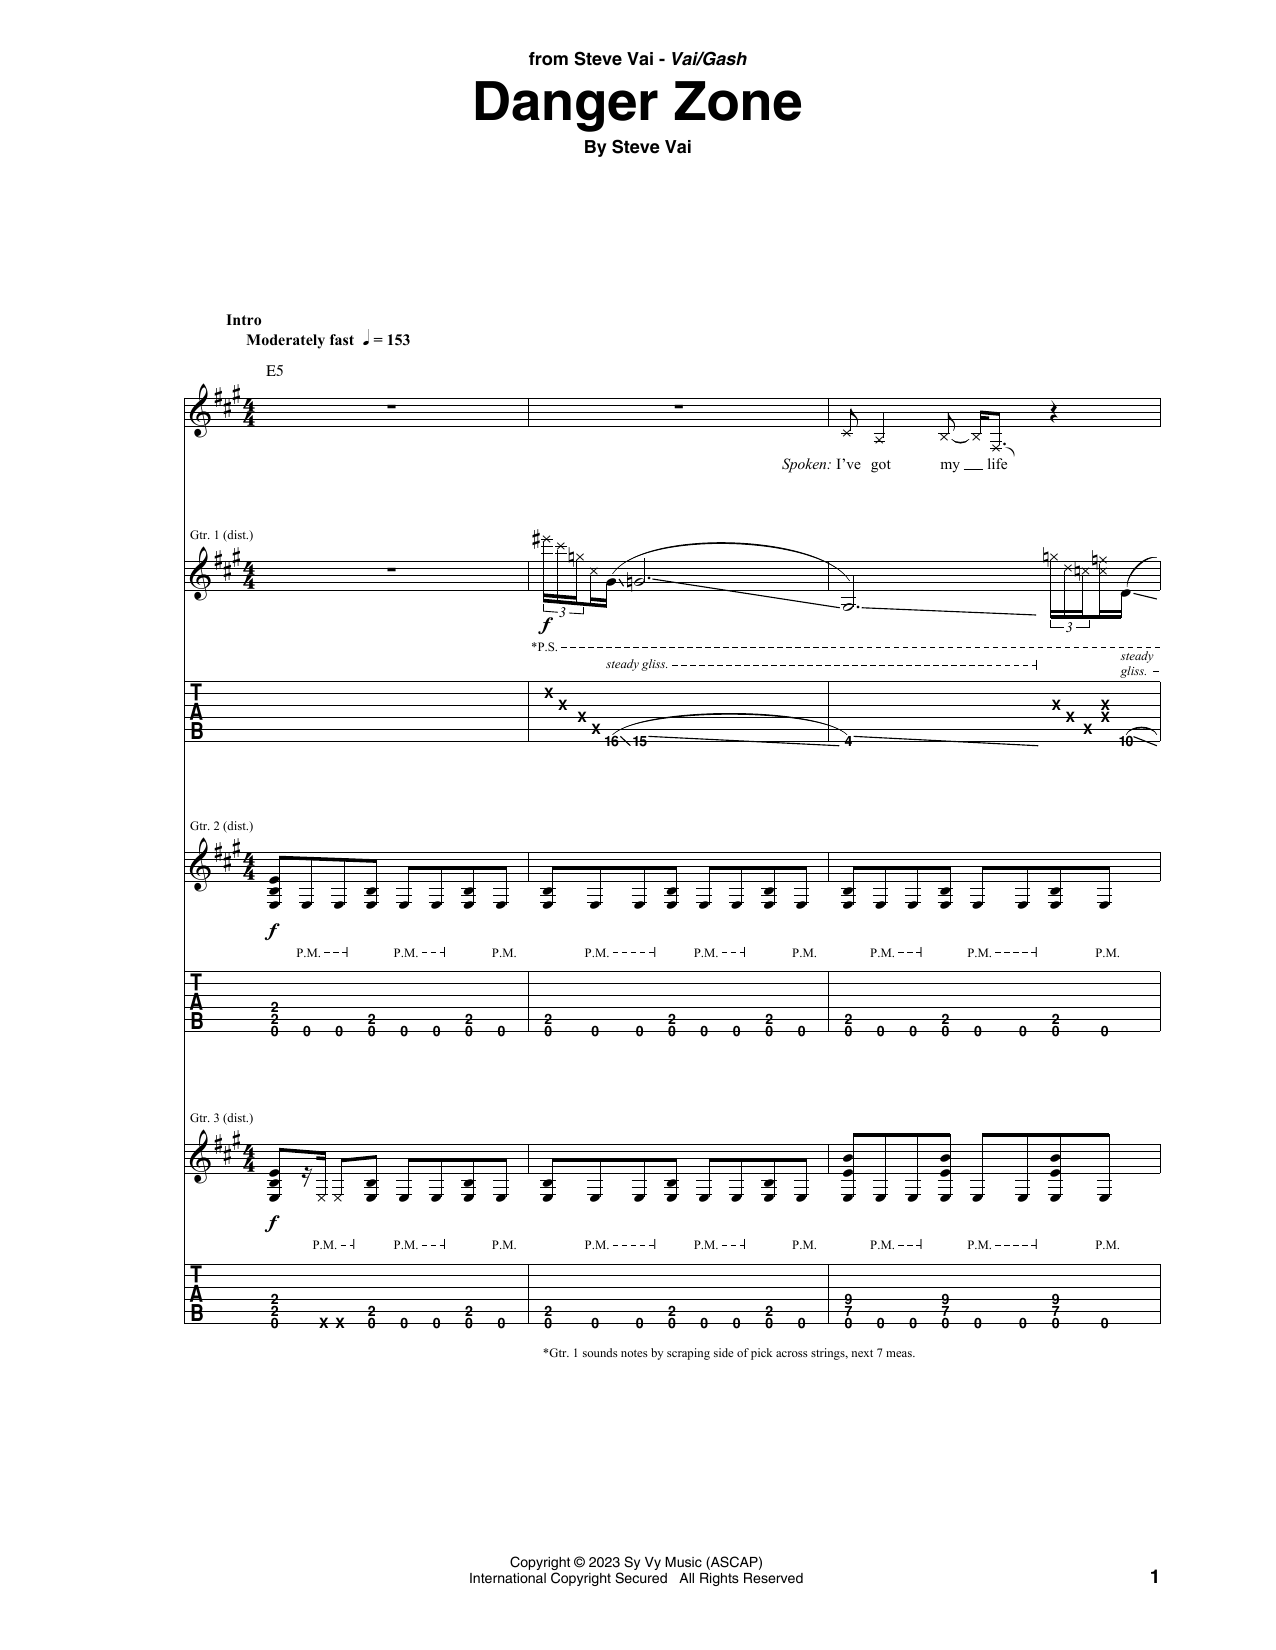 Steve Vai Danger Zone Sheet Music Notes & Chords for Guitar Tab - Download or Print PDF